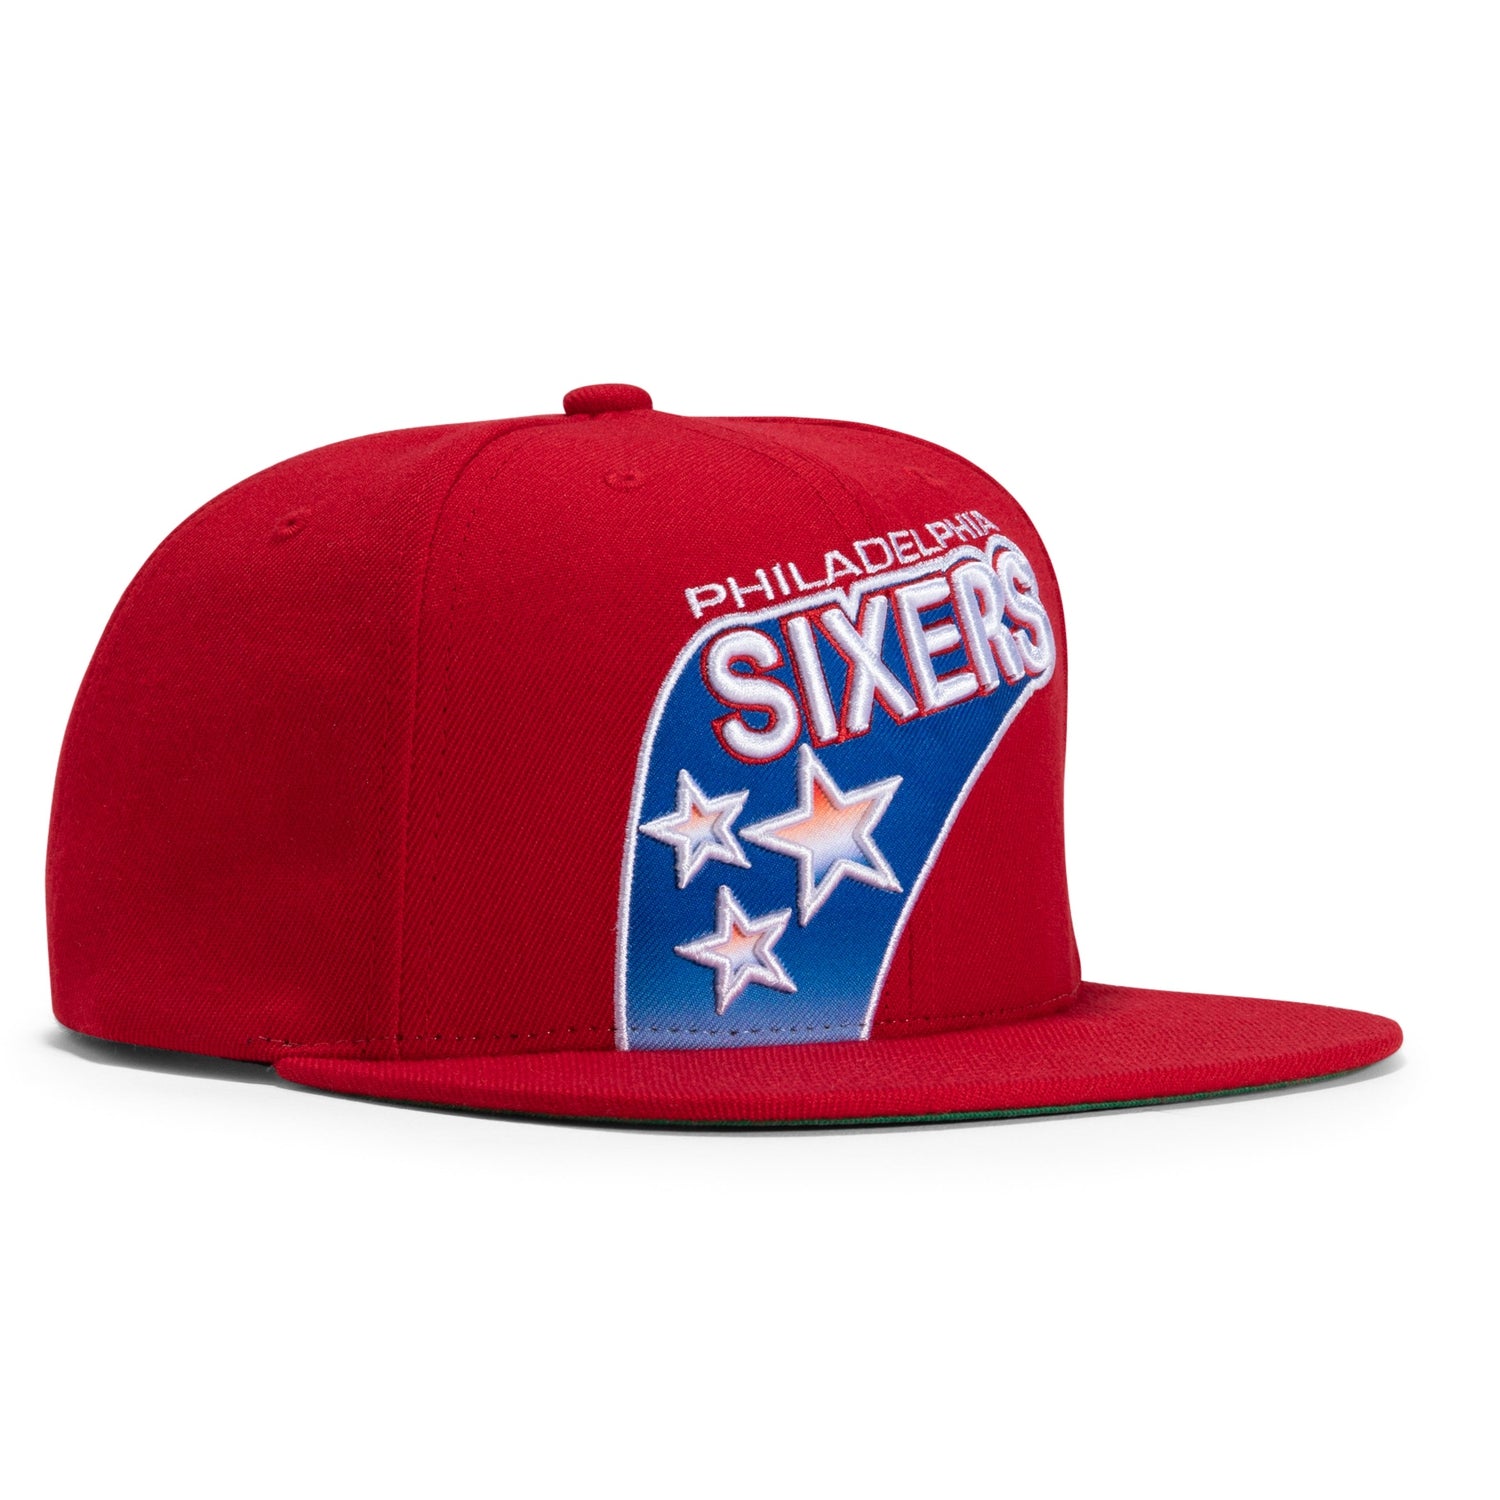 Mitchell & Ness Pop UV Detroit Pistons Snapback Hat - Royal